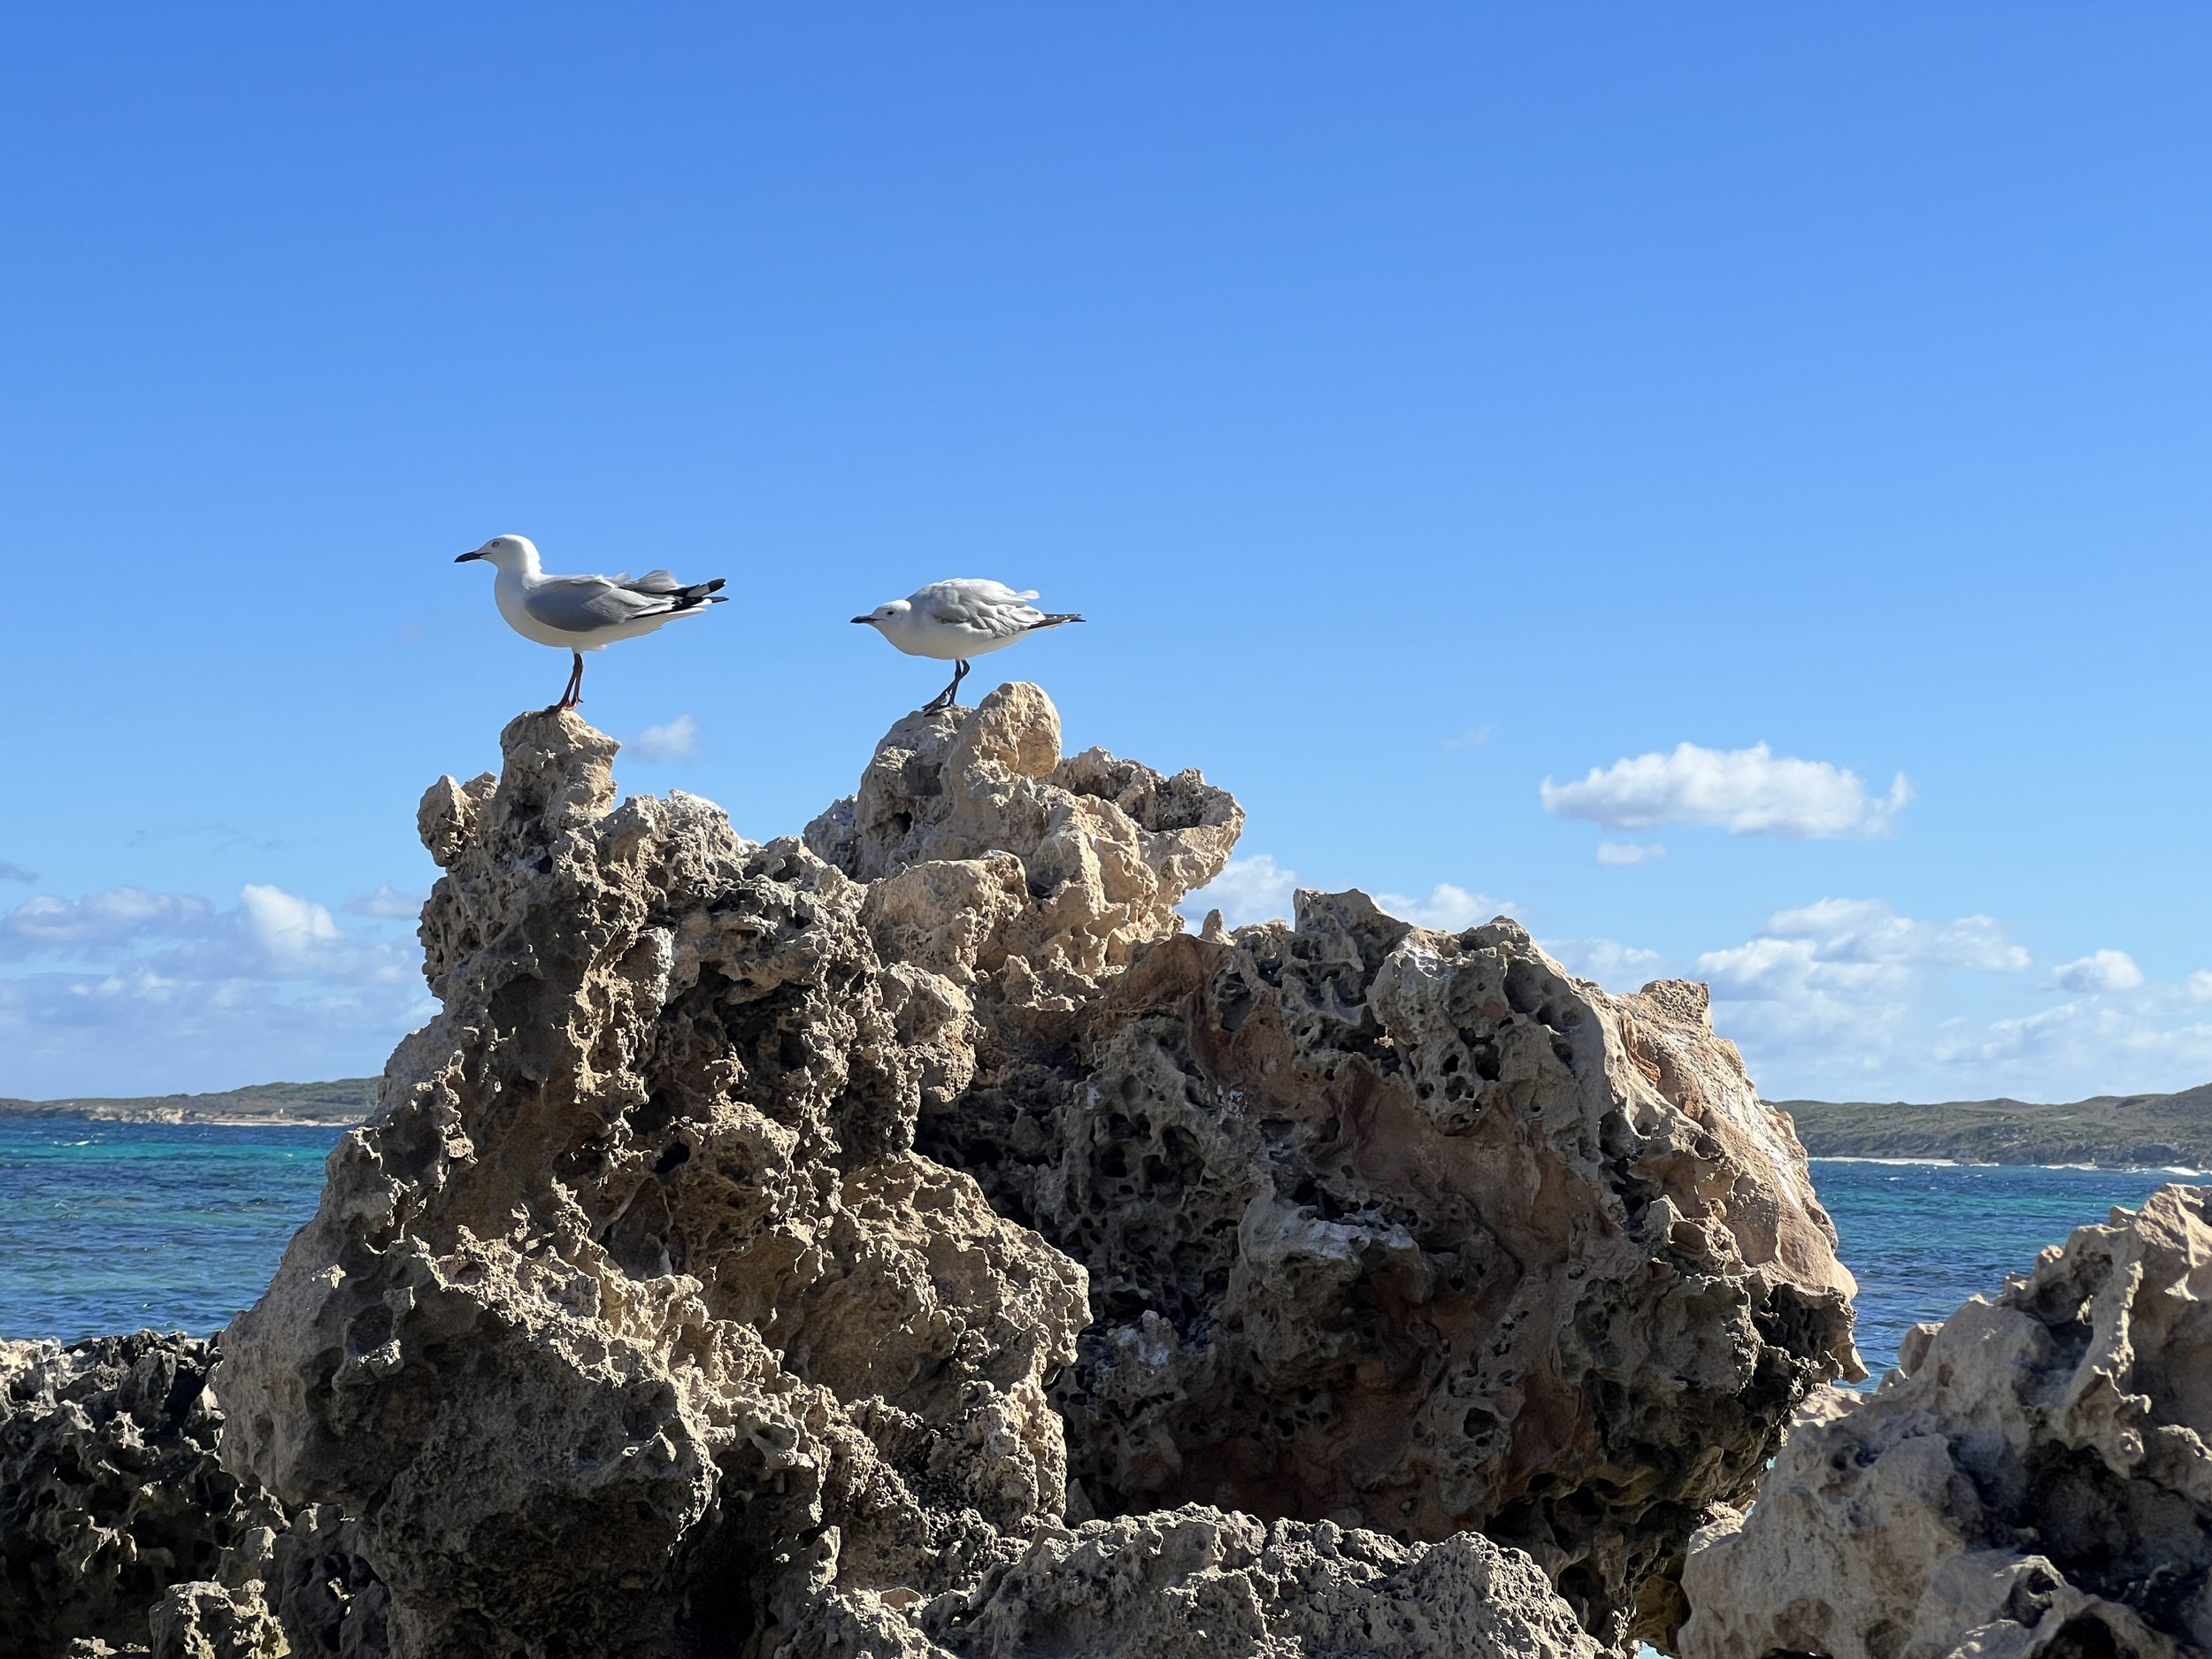 Limestone and seagulls